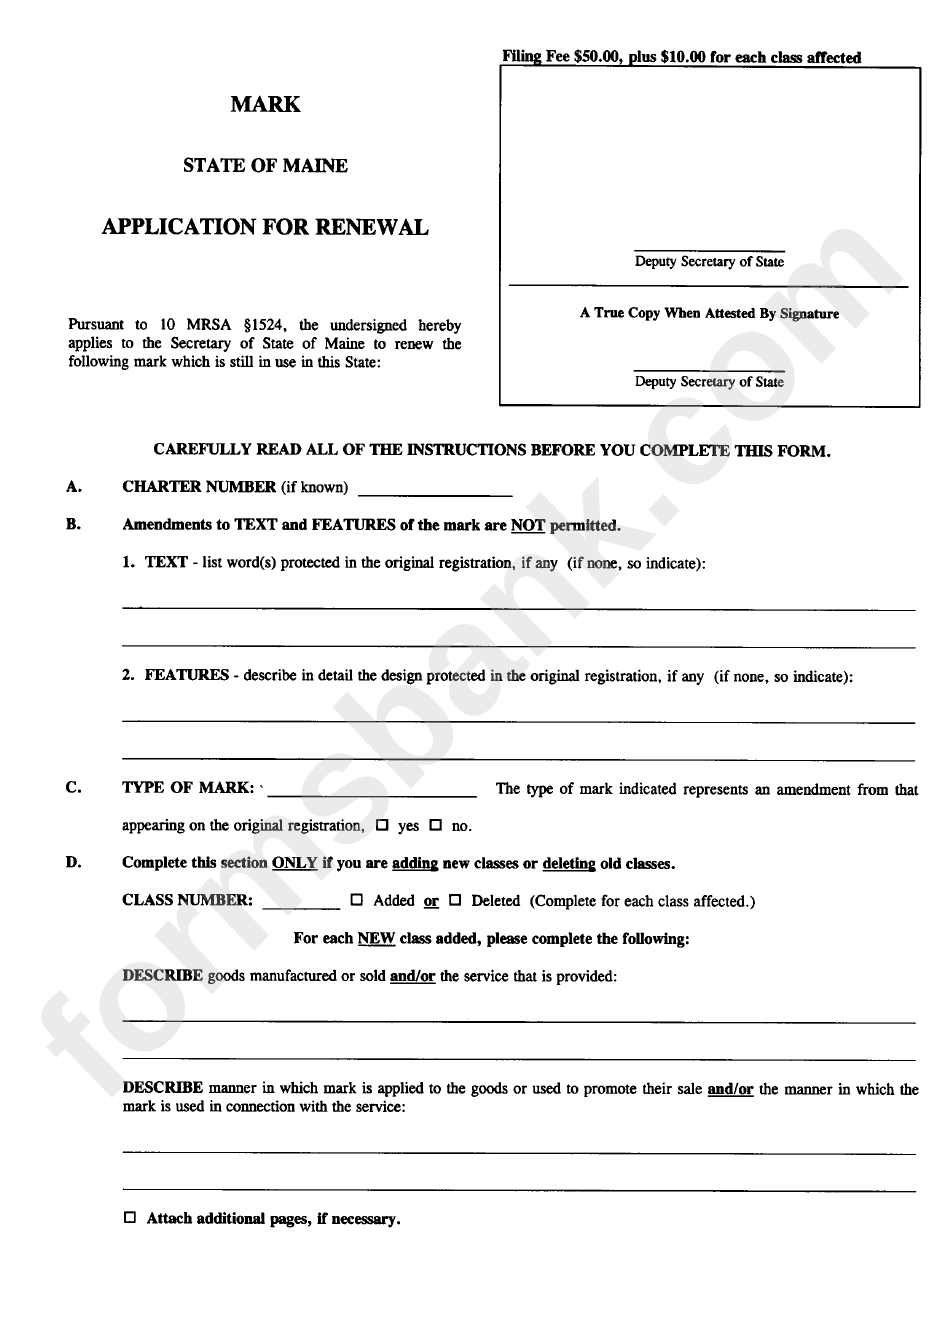 Form Mark-2 - Mark Application For Renewal